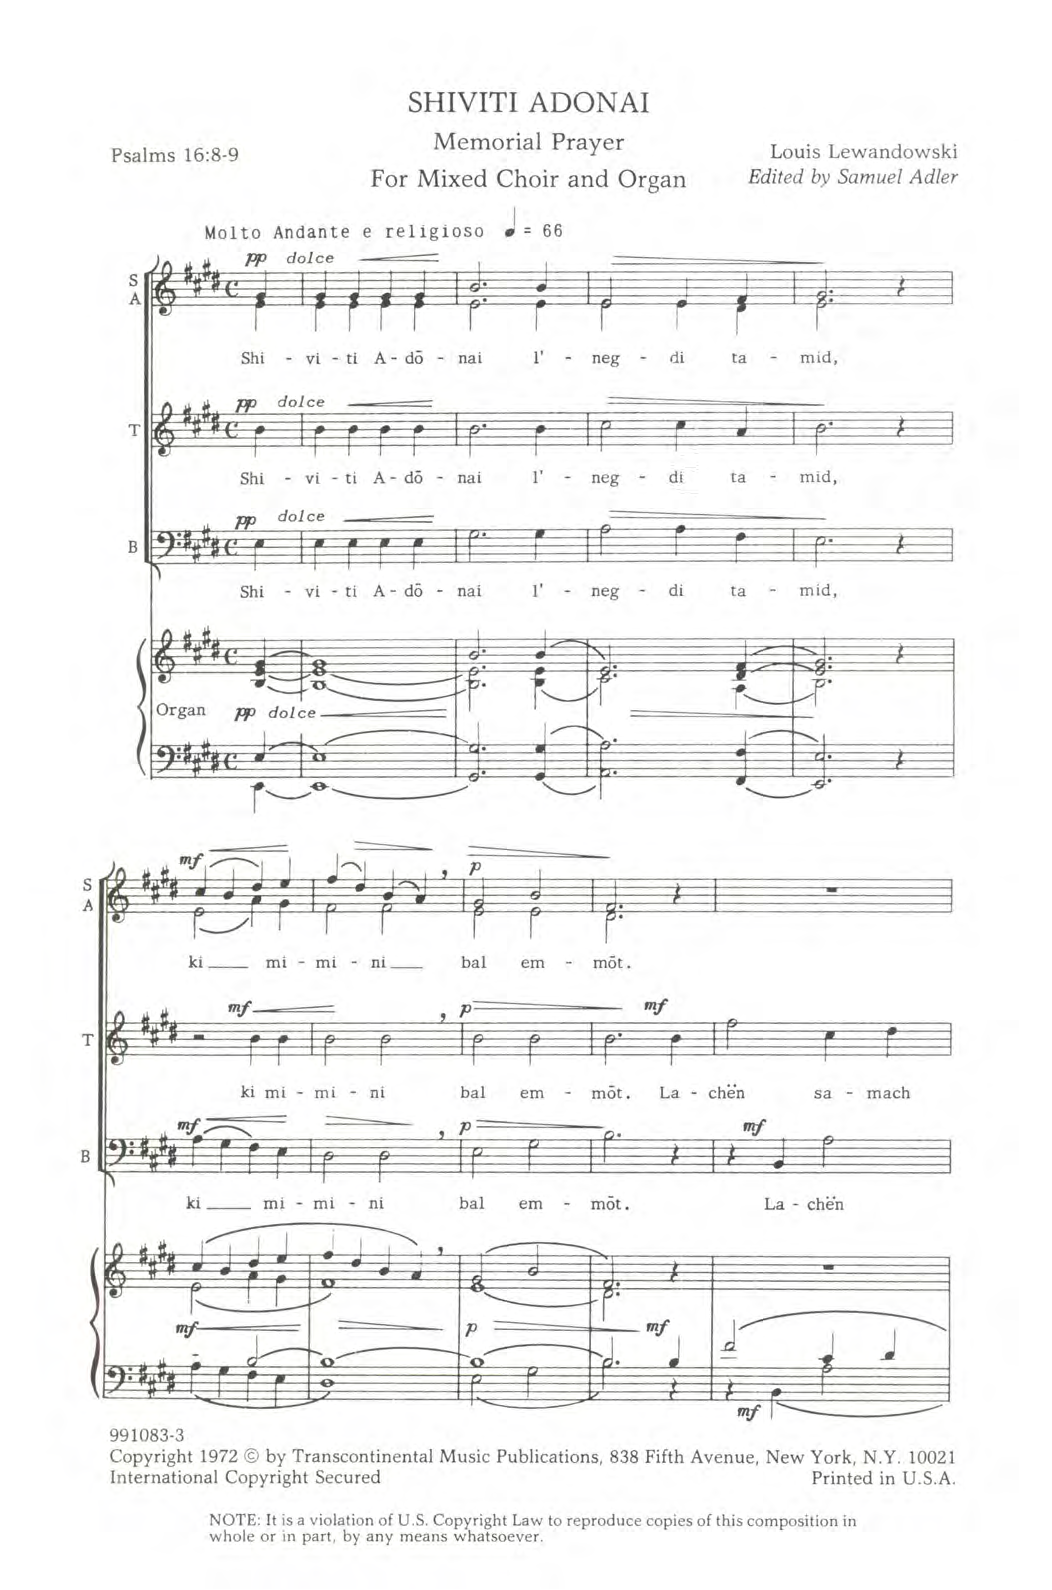 Louis Lewandowski Shiviti Adonai Sheet Music Notes & Chords for Choral - Download or Print PDF